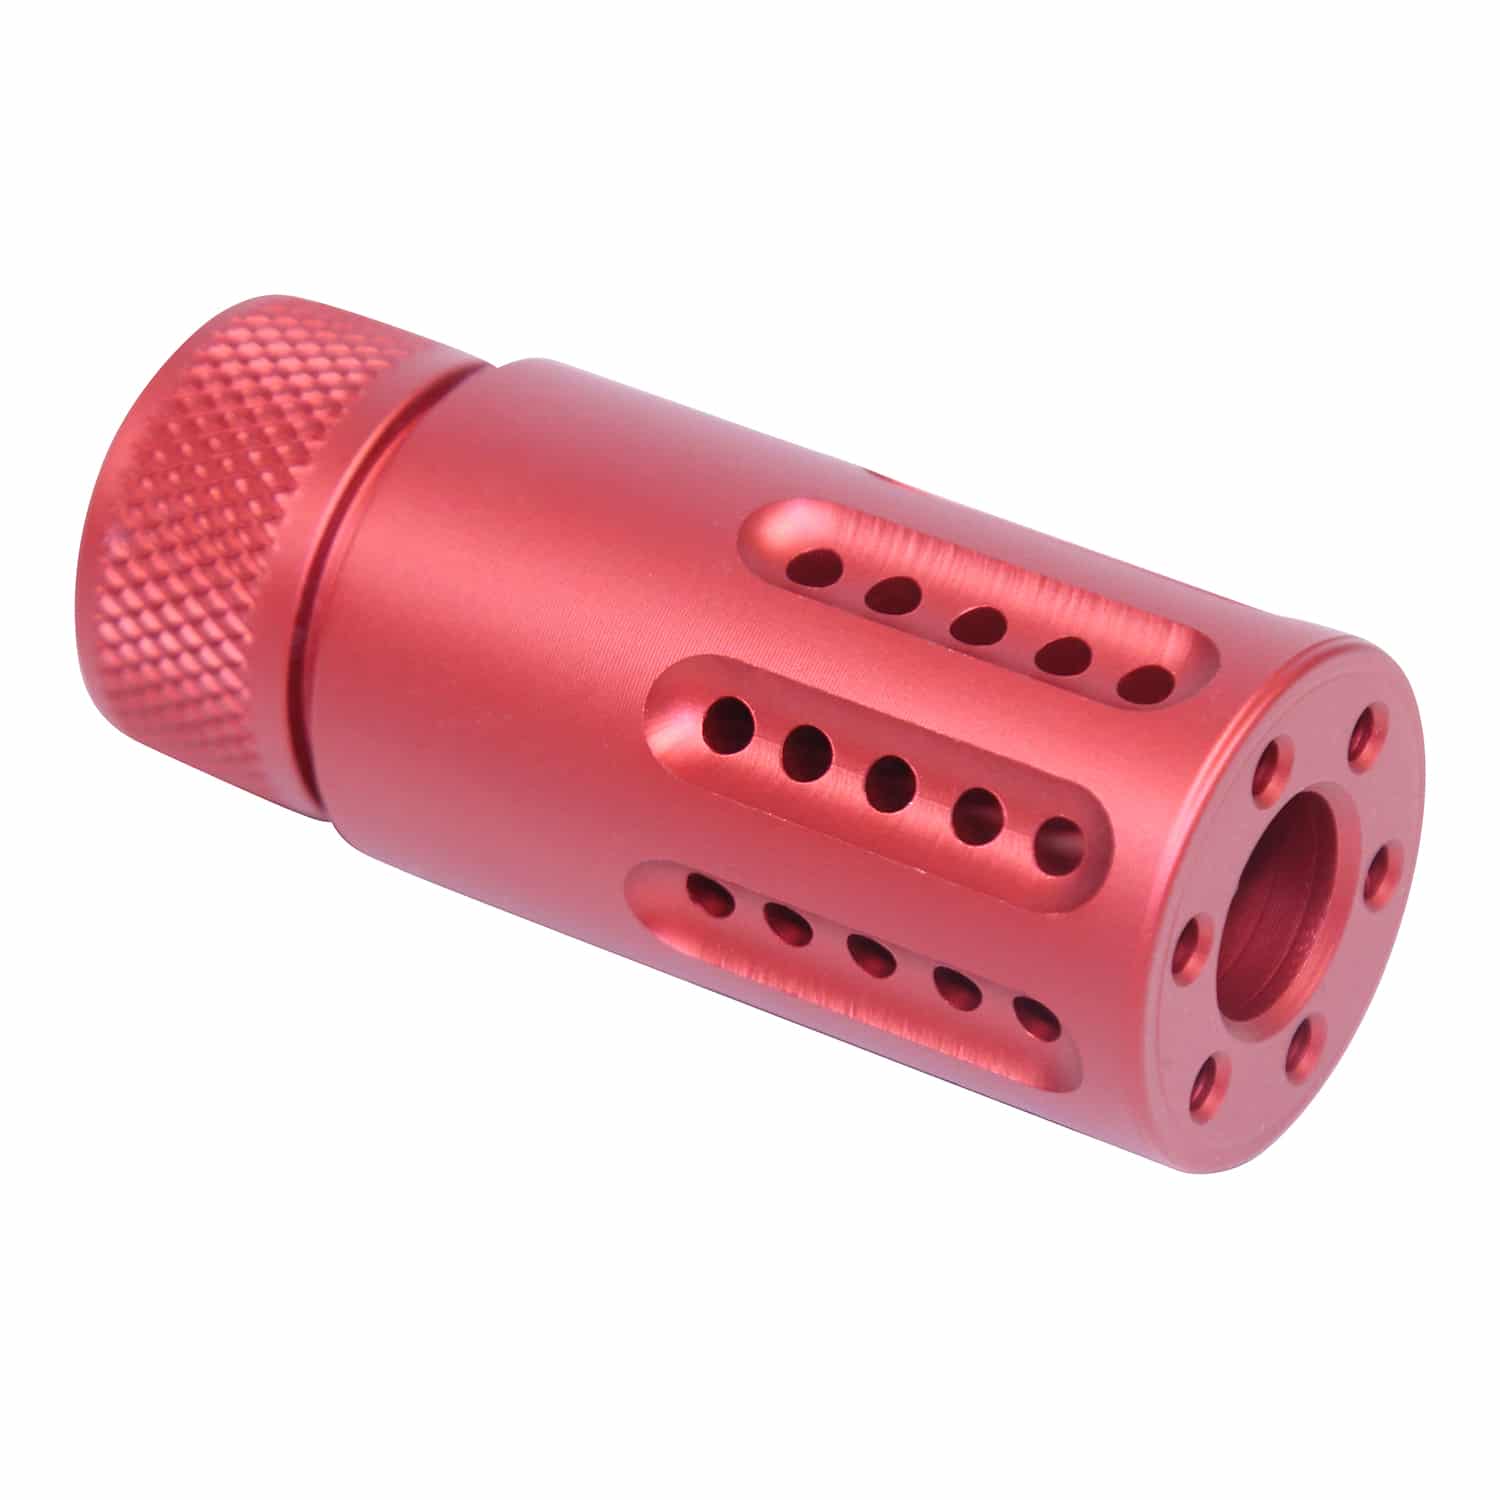 Anodized red 9MM AR muzzle brake and mini barrel shroud